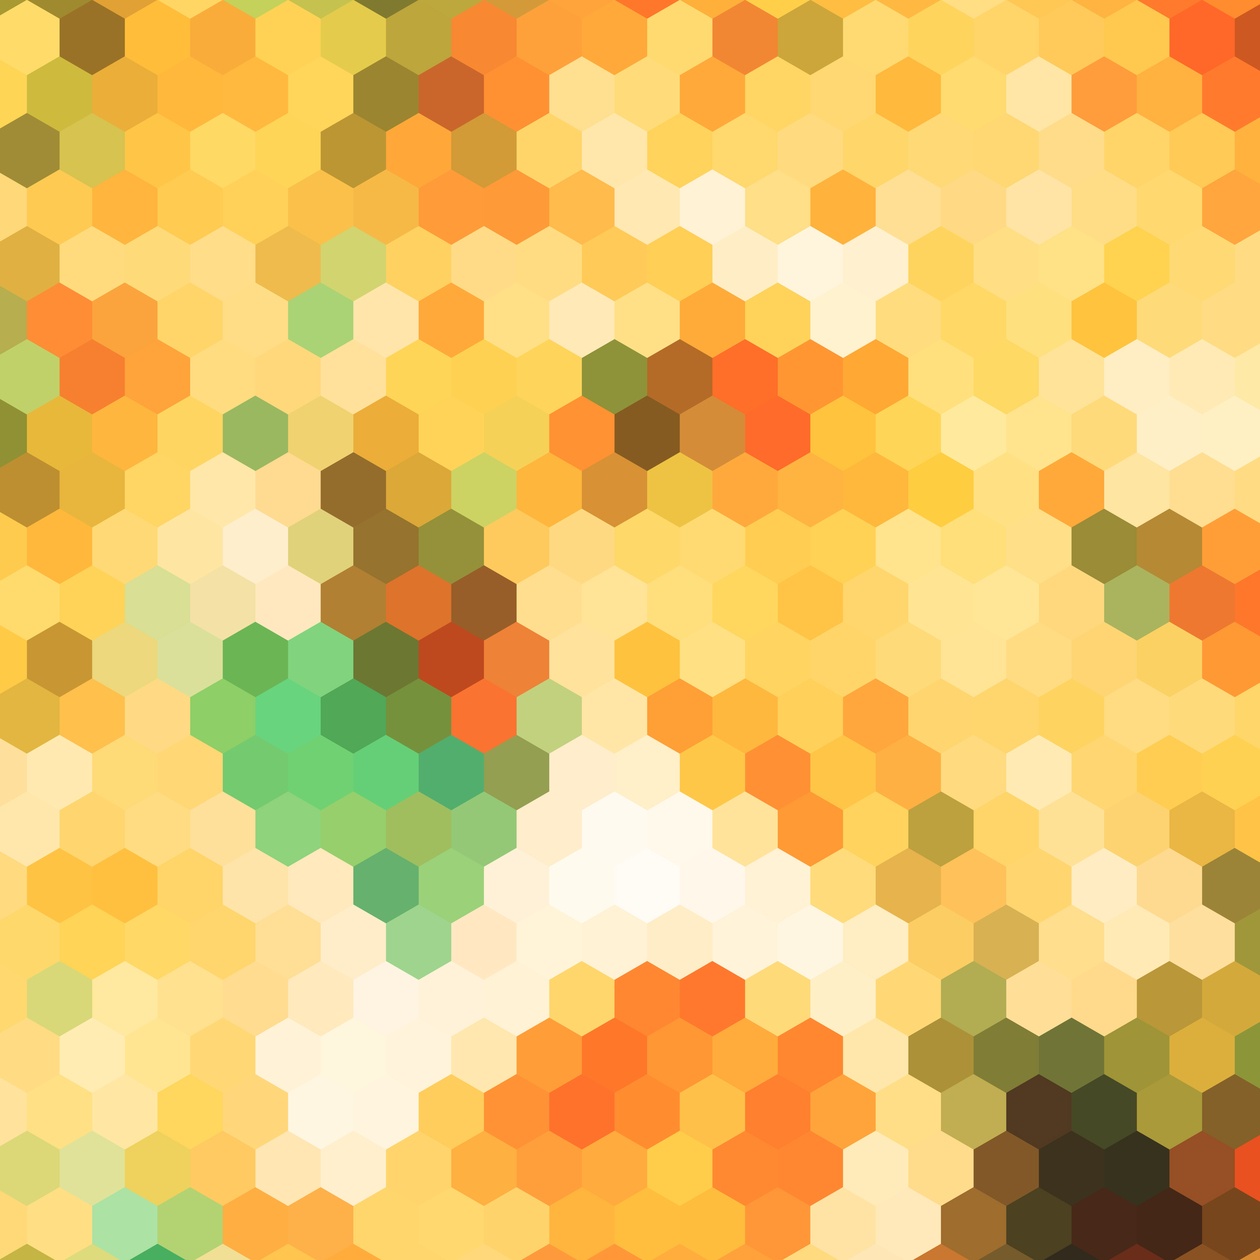 abstract yellow hexagon pattern background Photoshop brush